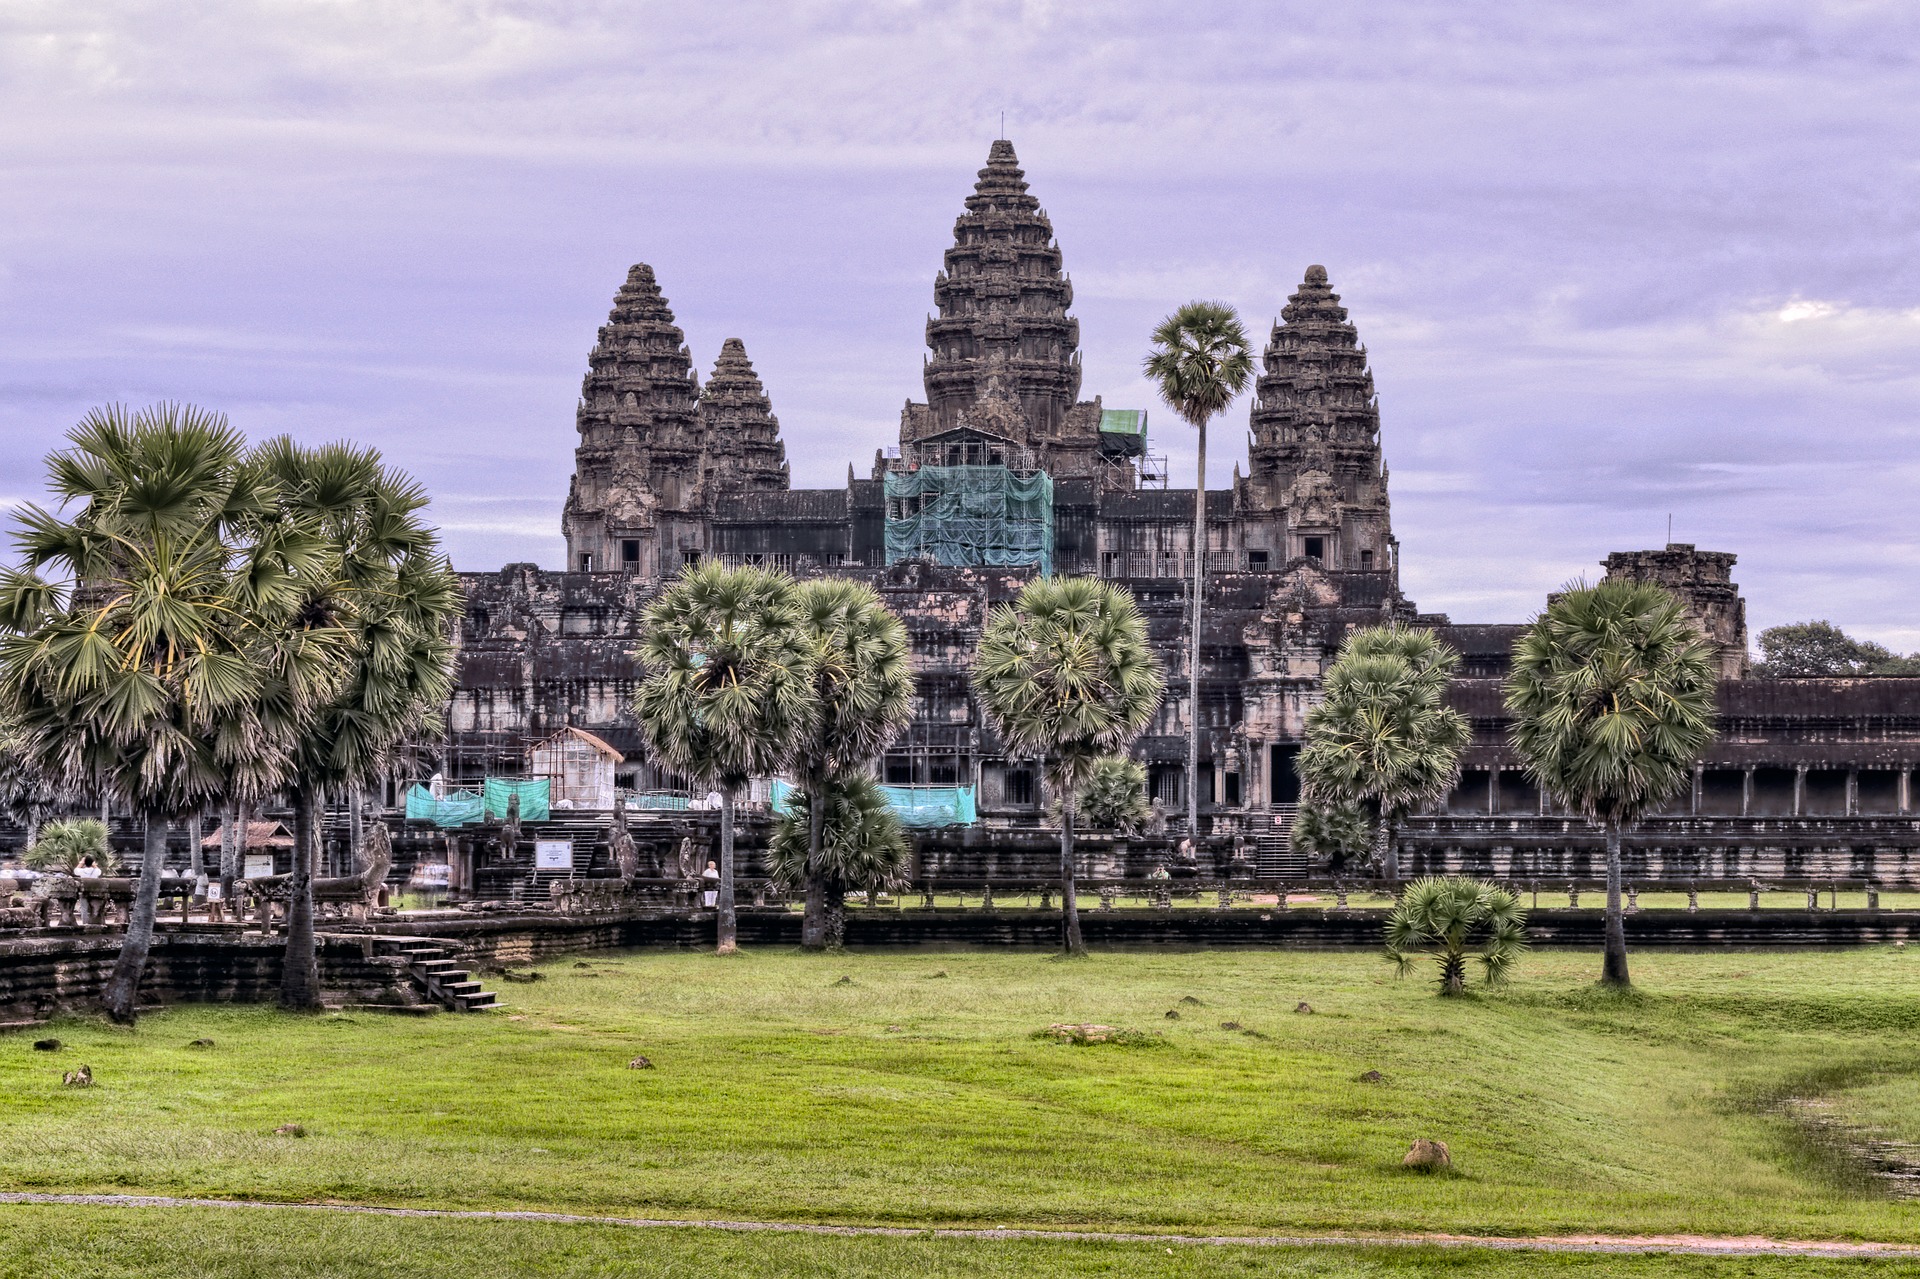 Ankor Wat Architecture